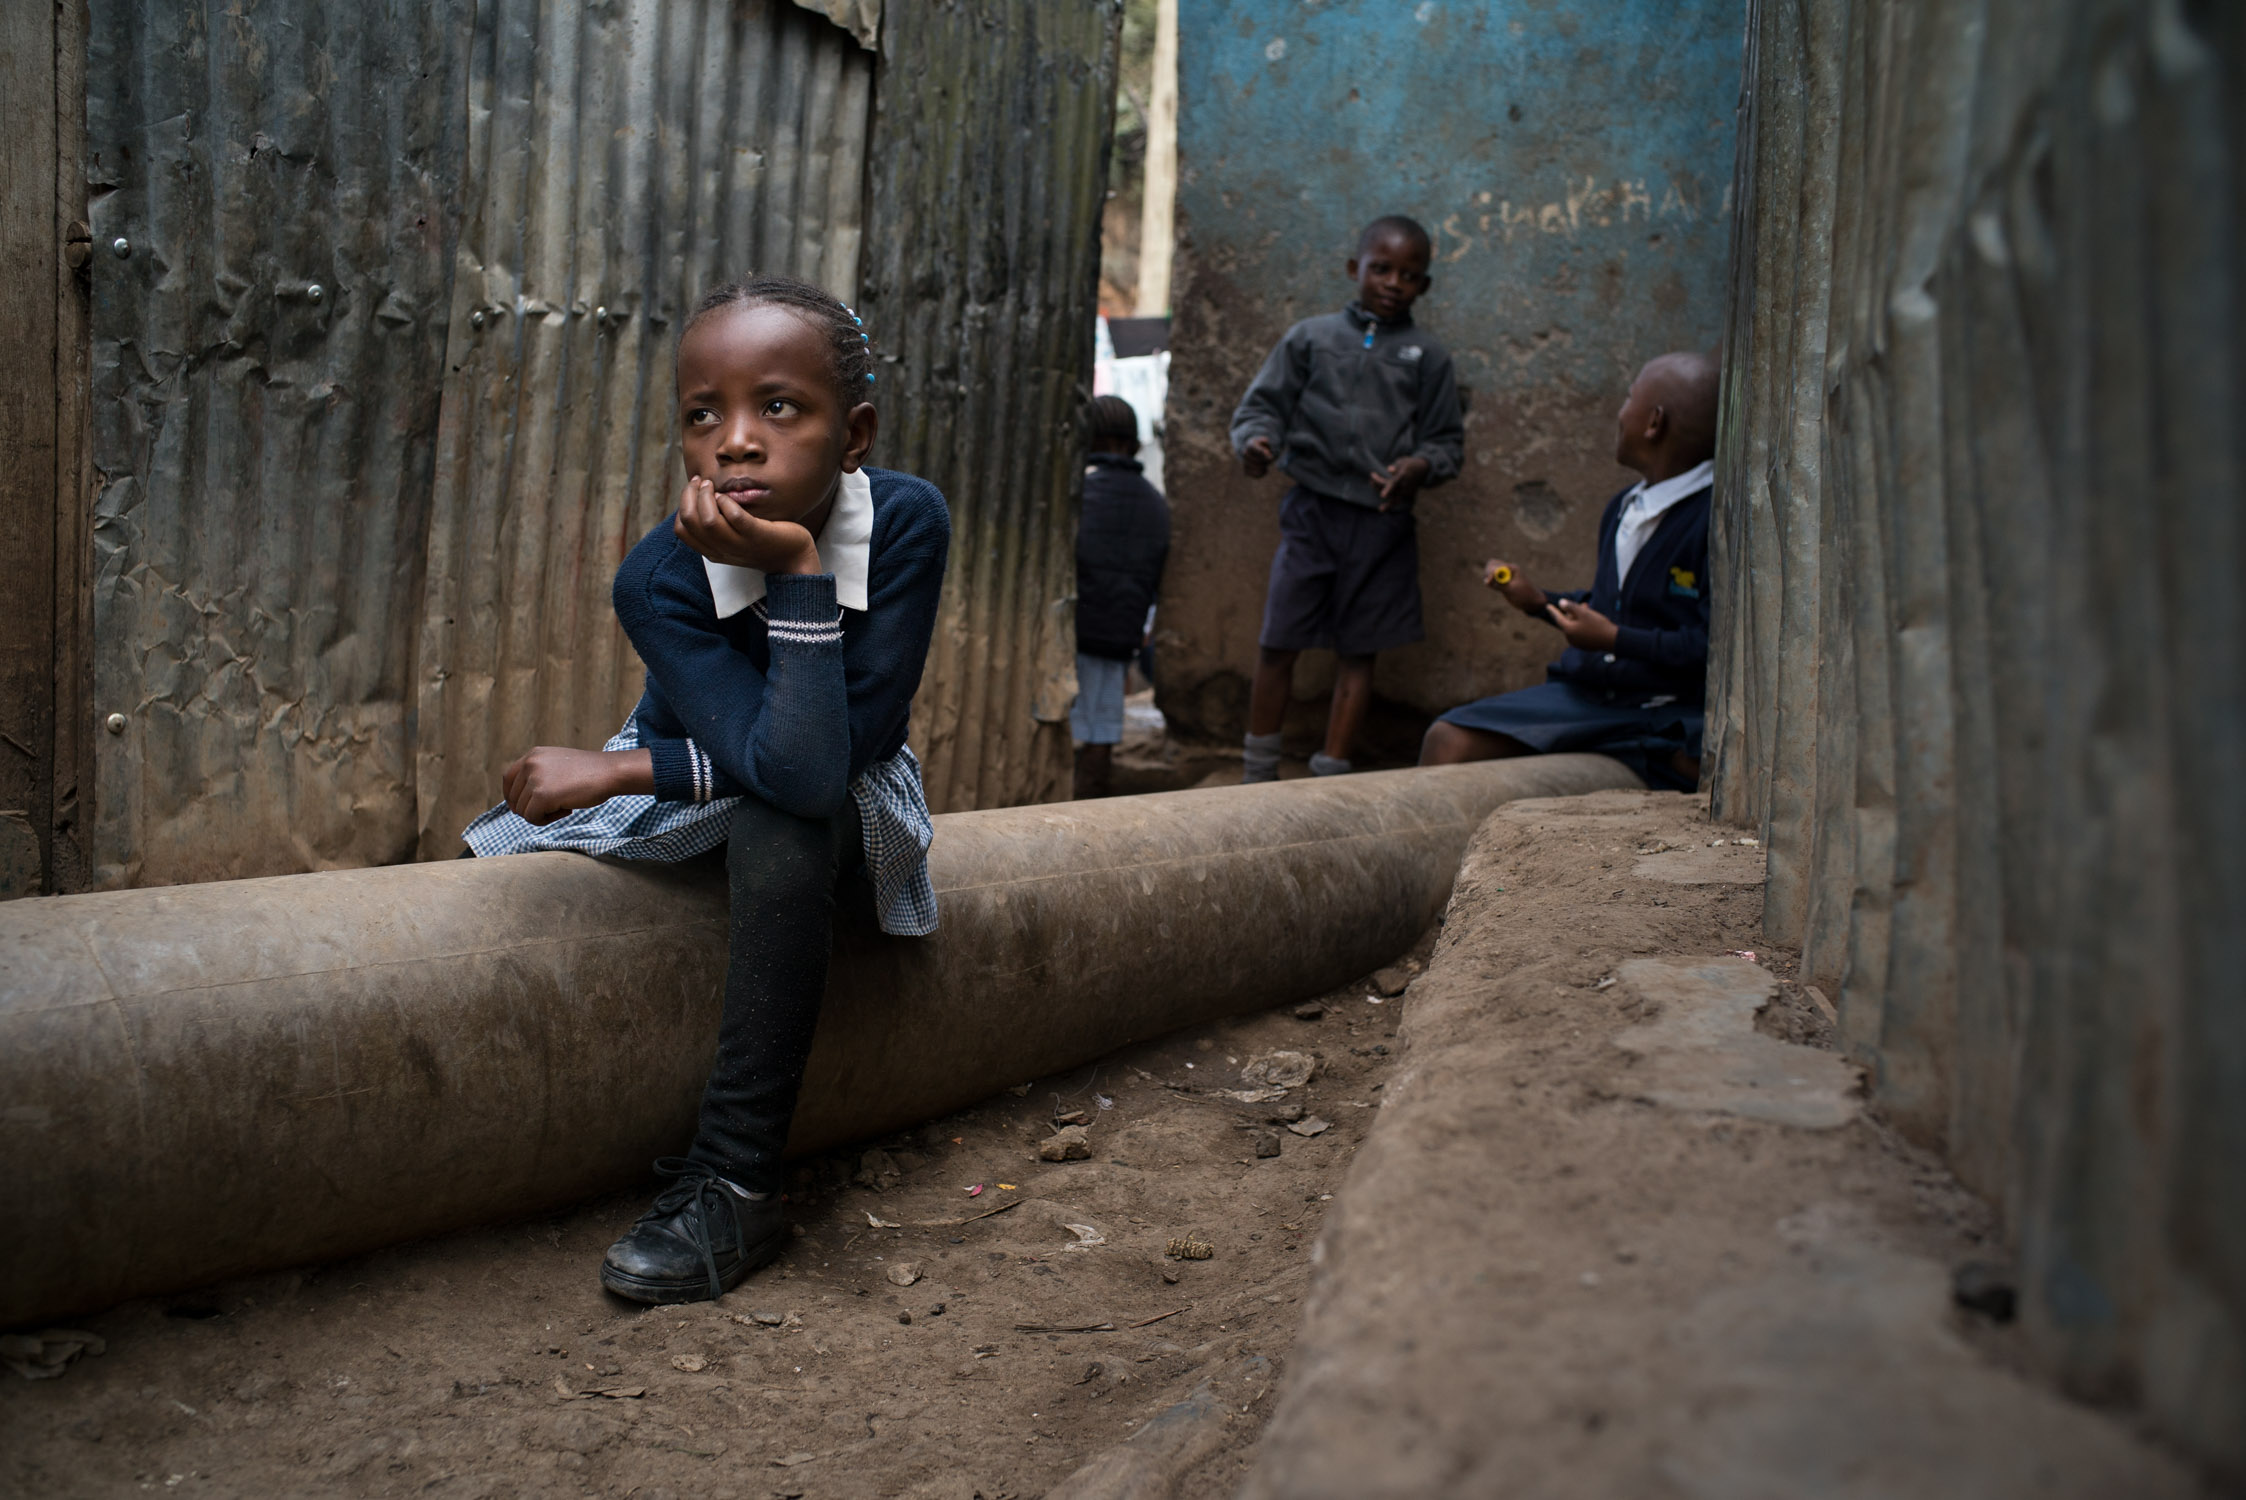  Children at a school (not Bridge) in Mathare slum area of Nairobi. September 19, 2016. Mathare slum, Nairobi, Kenya.&nbsp; 